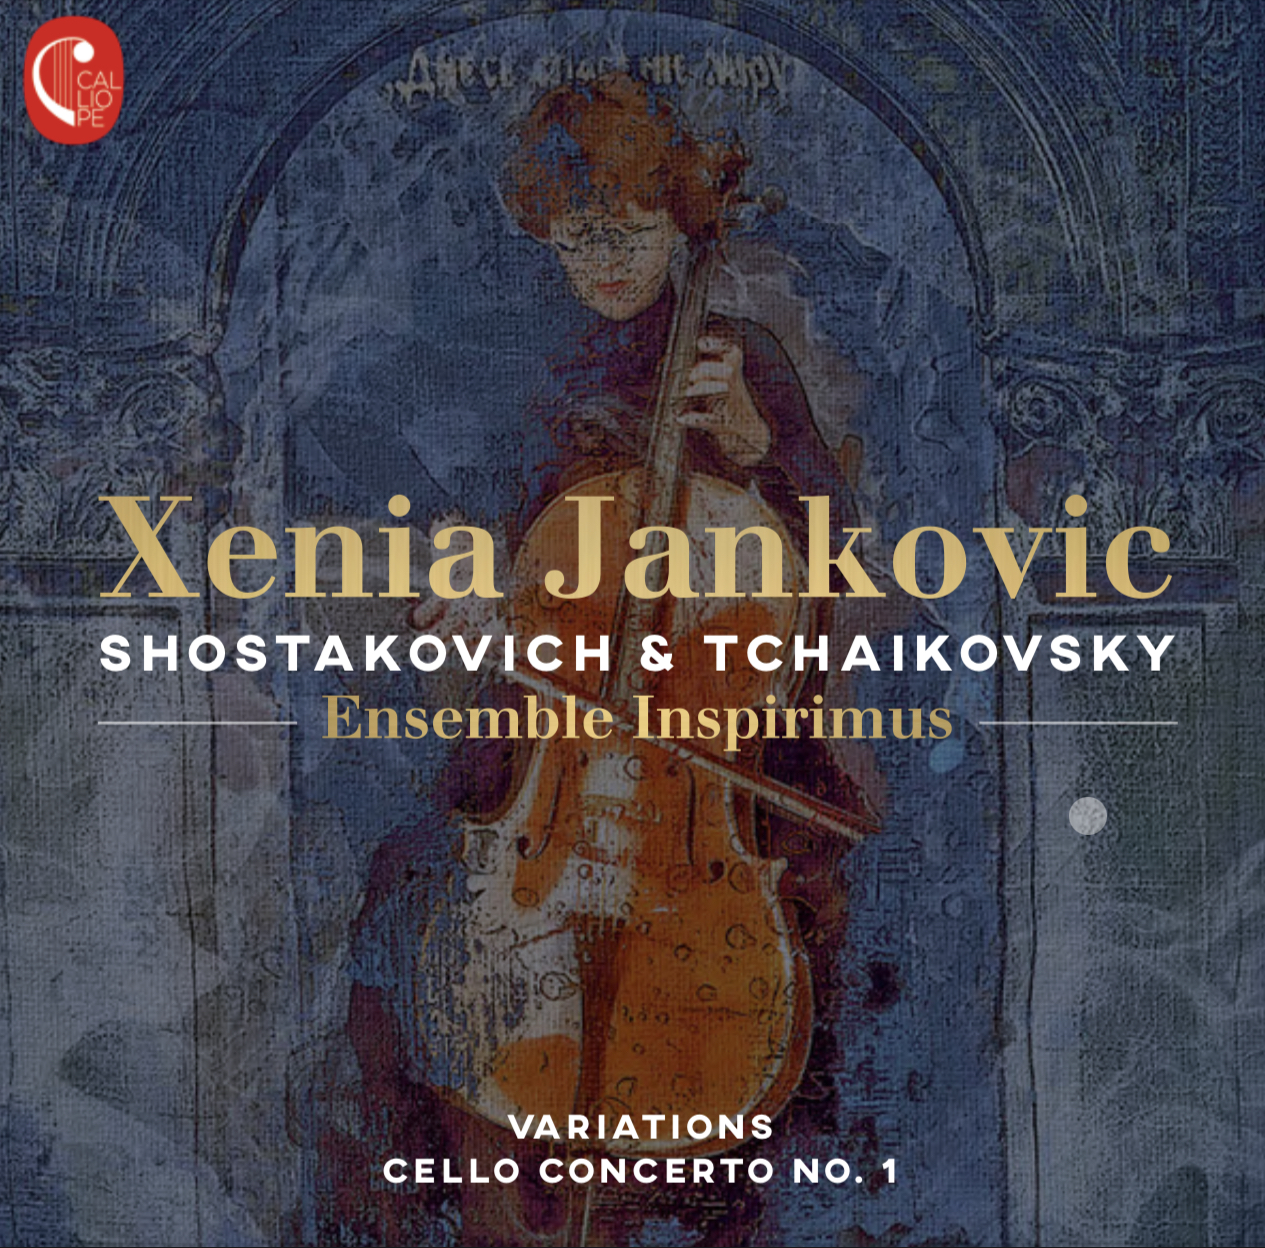 Shostakovich & Tchaikovsky with Ensemble Inspirimus